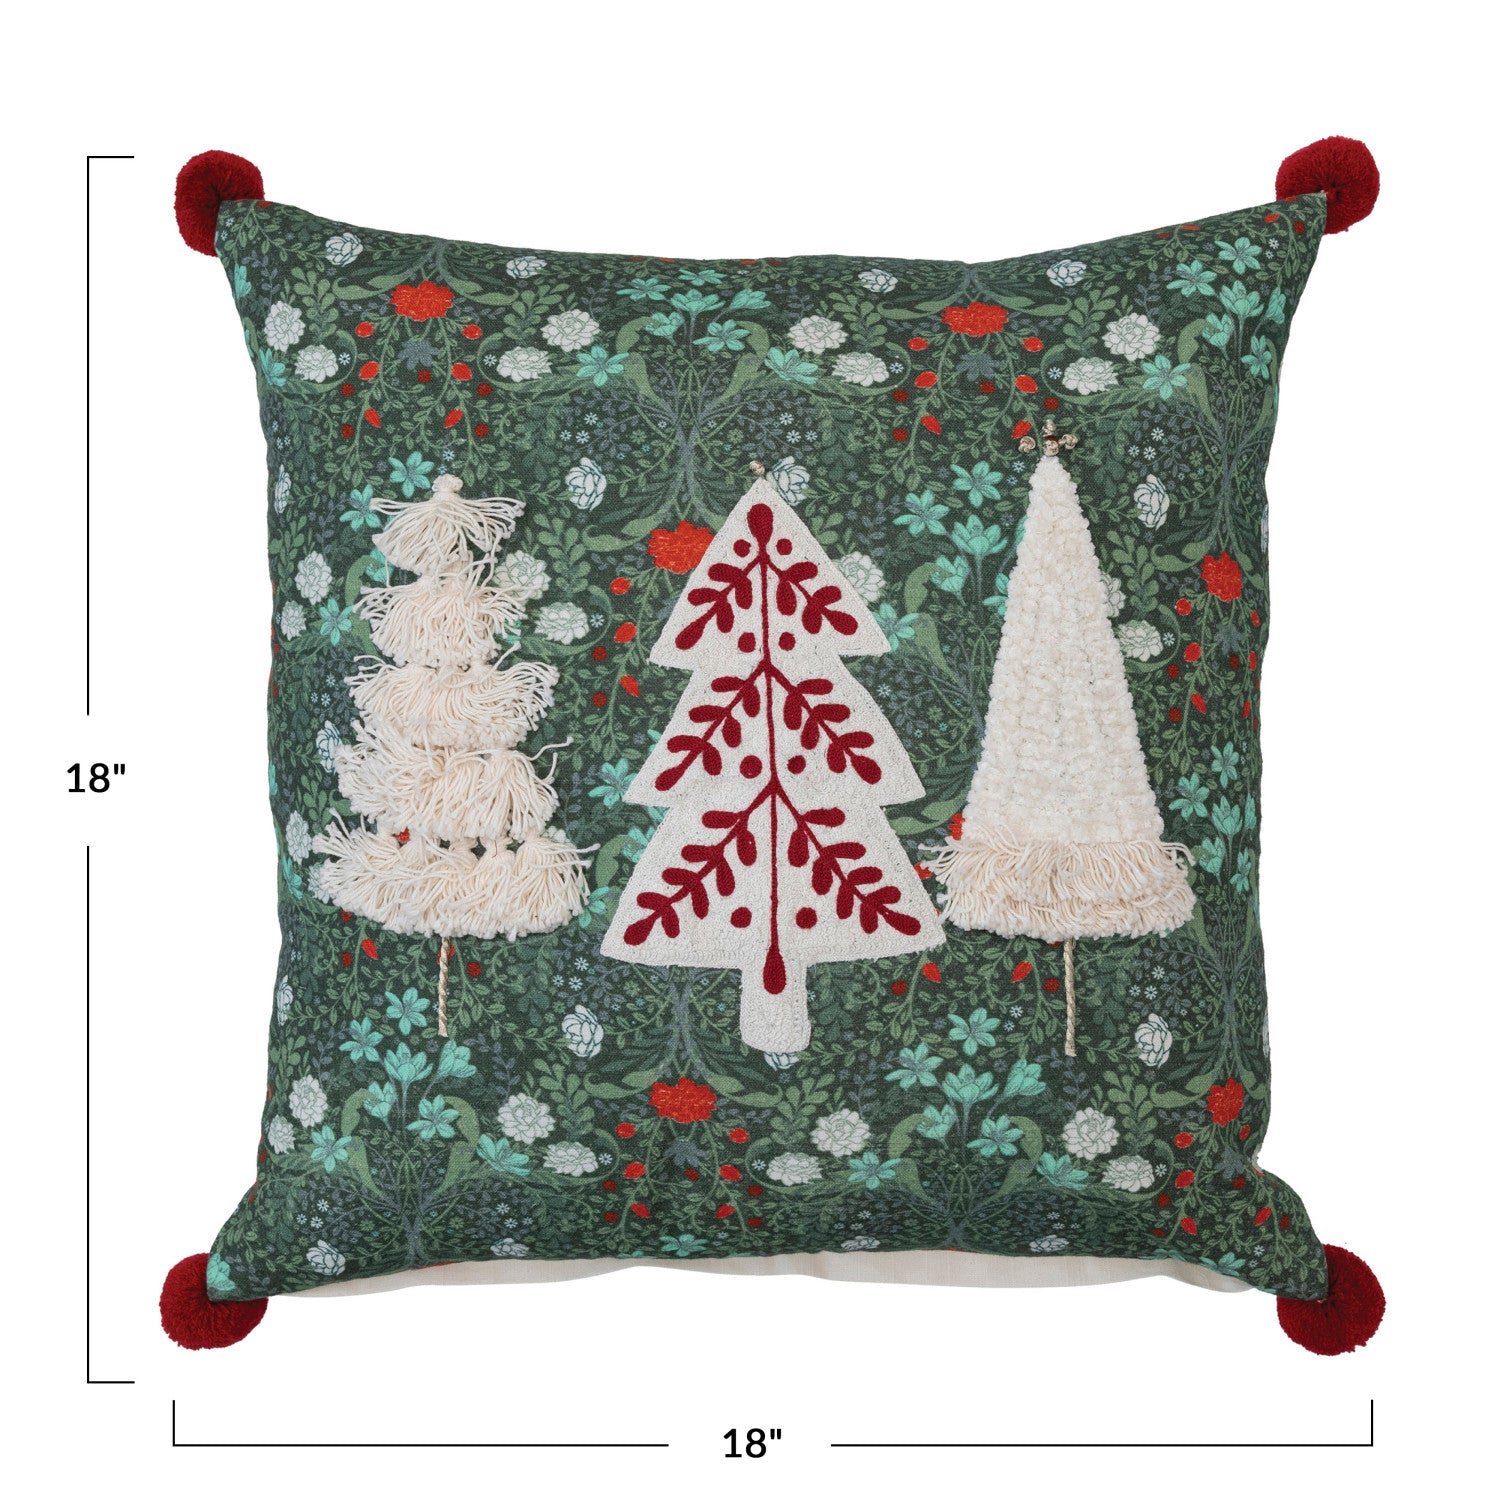 Square Cotton Printed Slub Pillow w/ Trees, Applique, Embroidery & Pom Pom Tassels